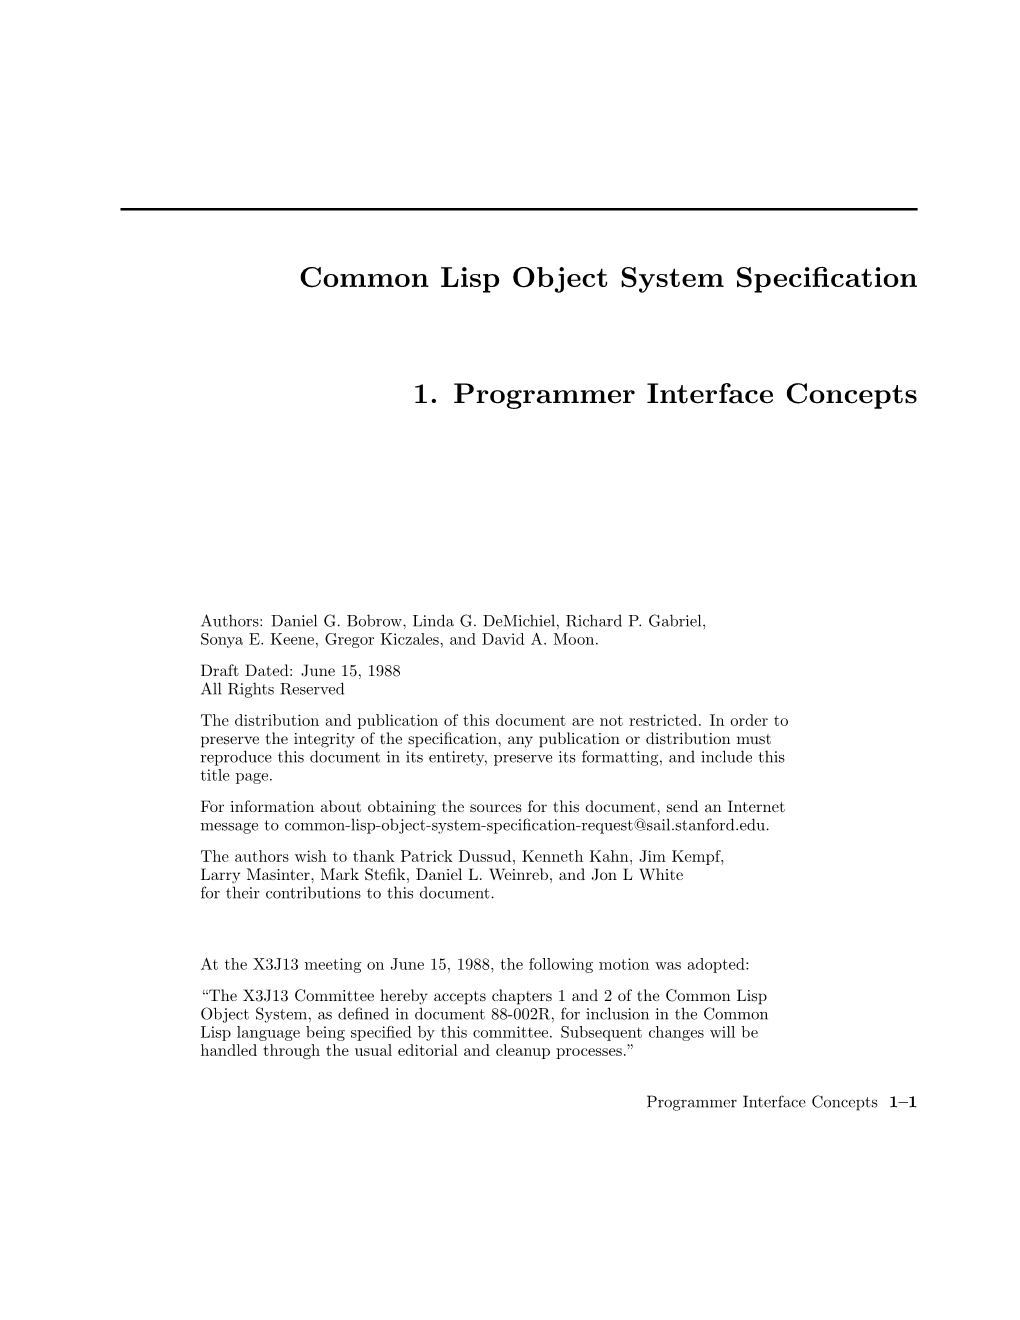 Common Lisp Object System Specification 1. Programmer